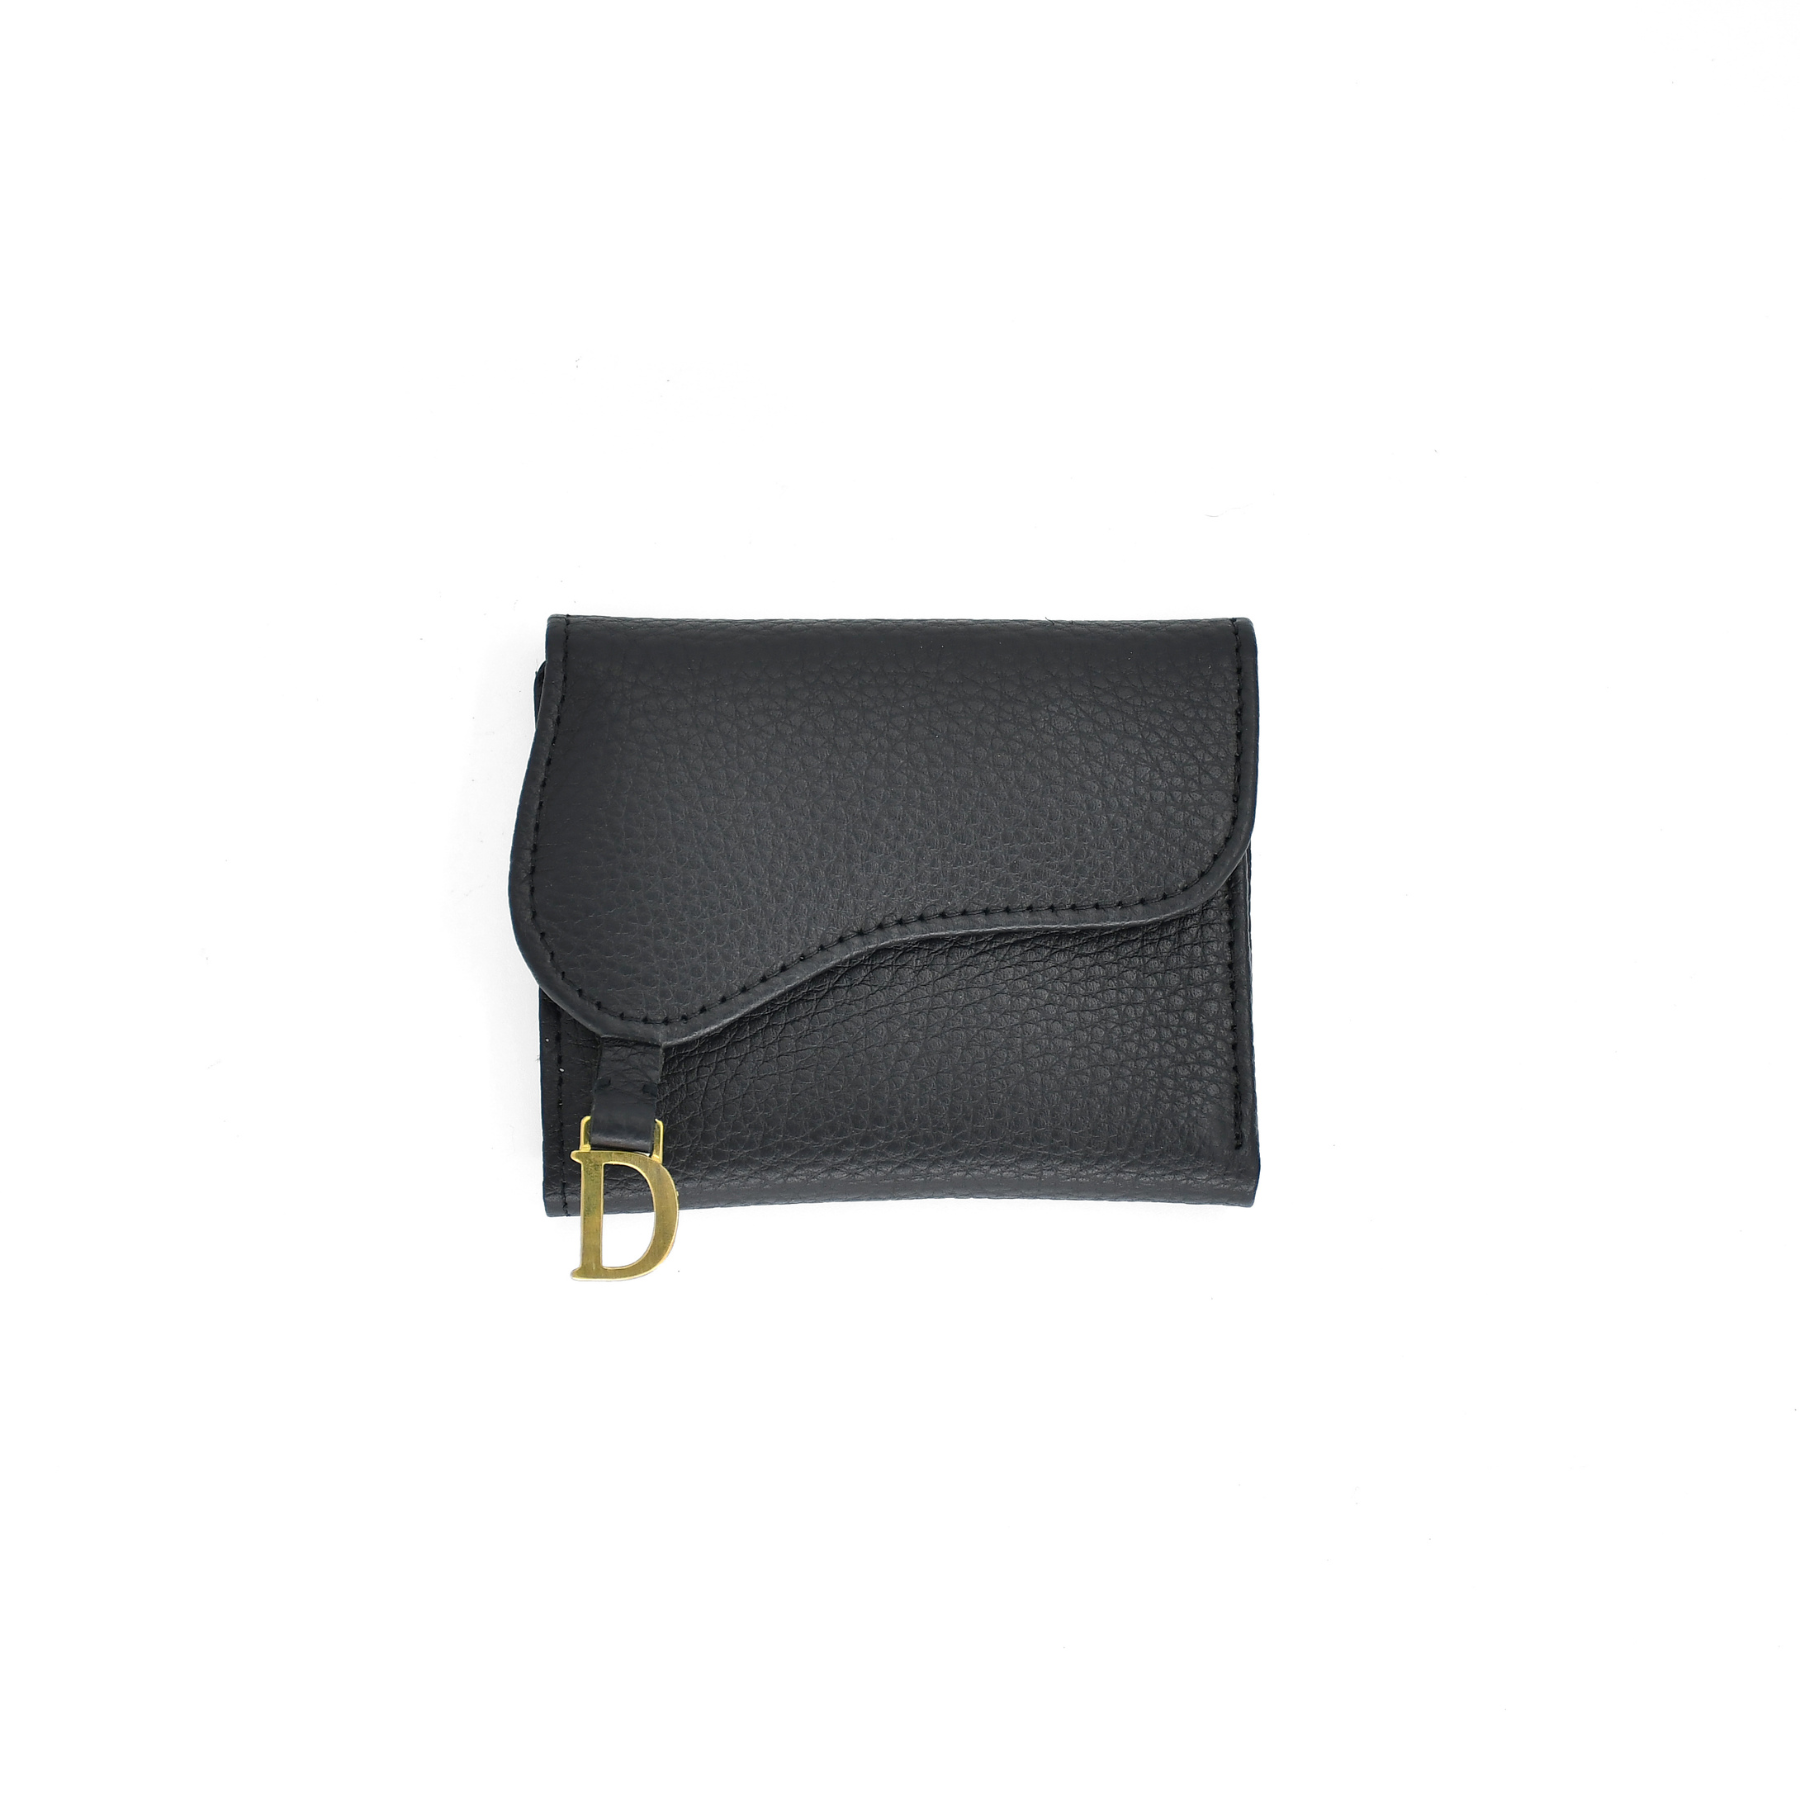 Gaucholife Black Leather Wallet